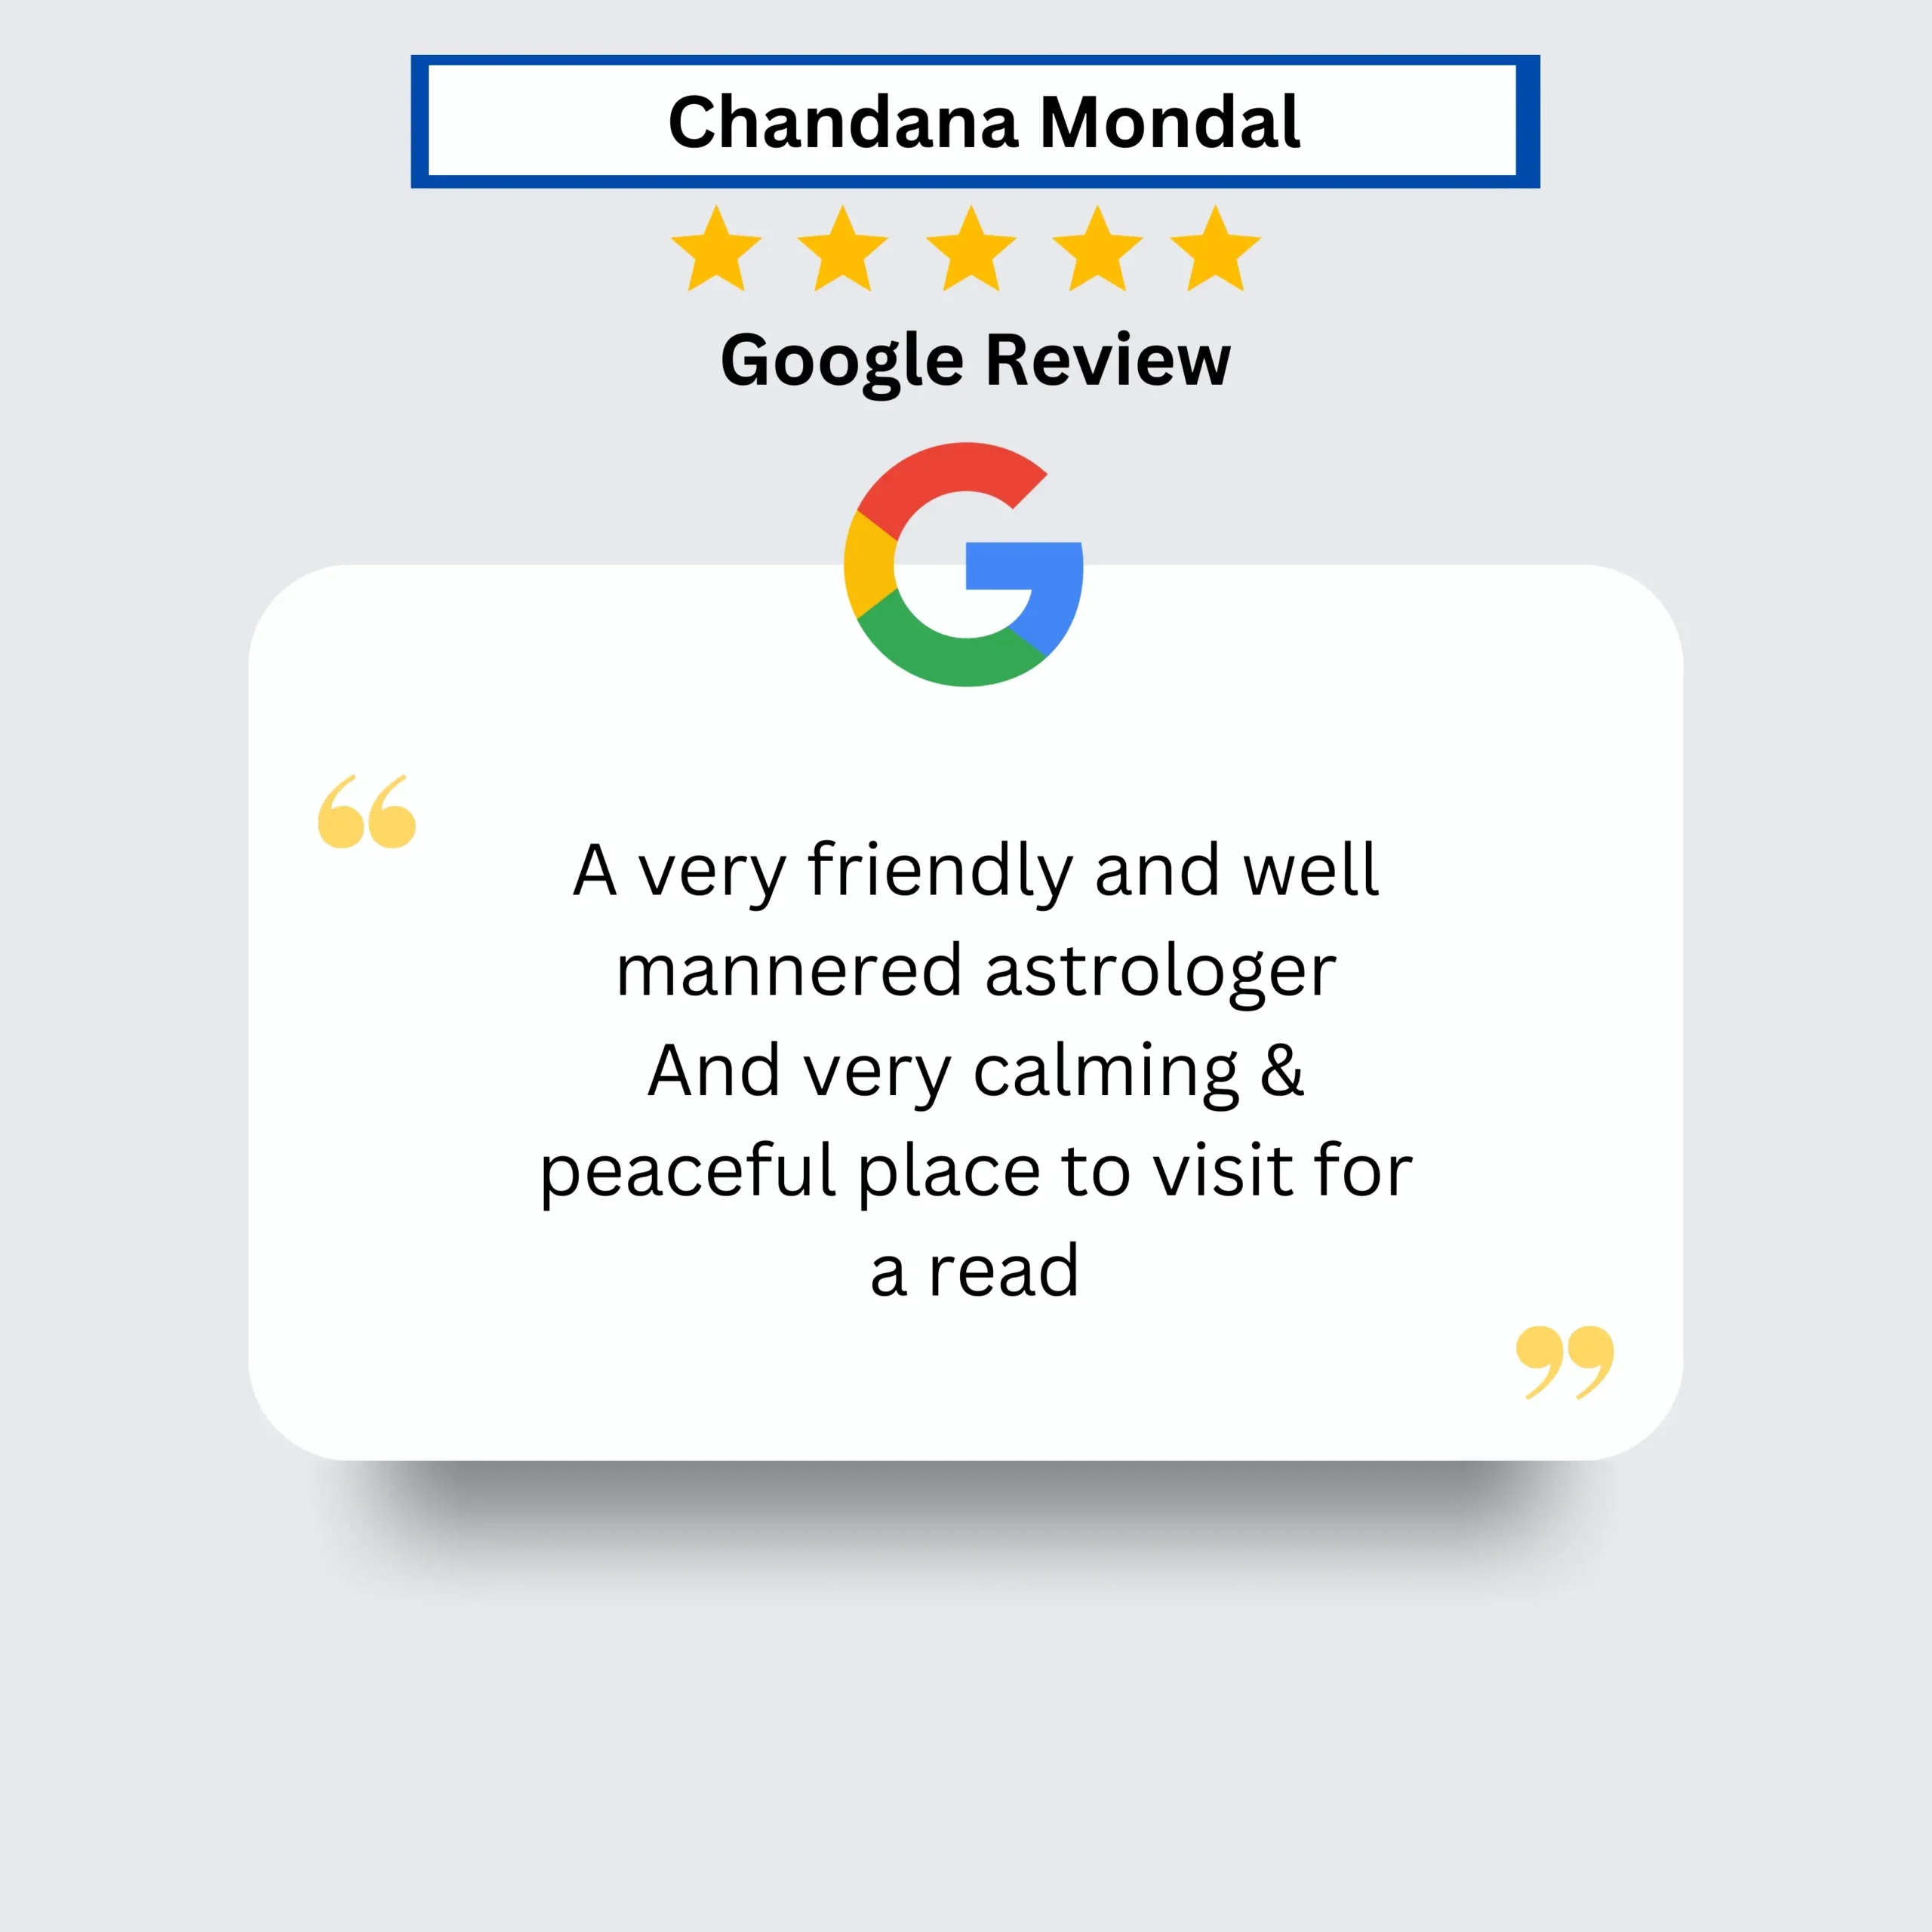 Chandana Mondal